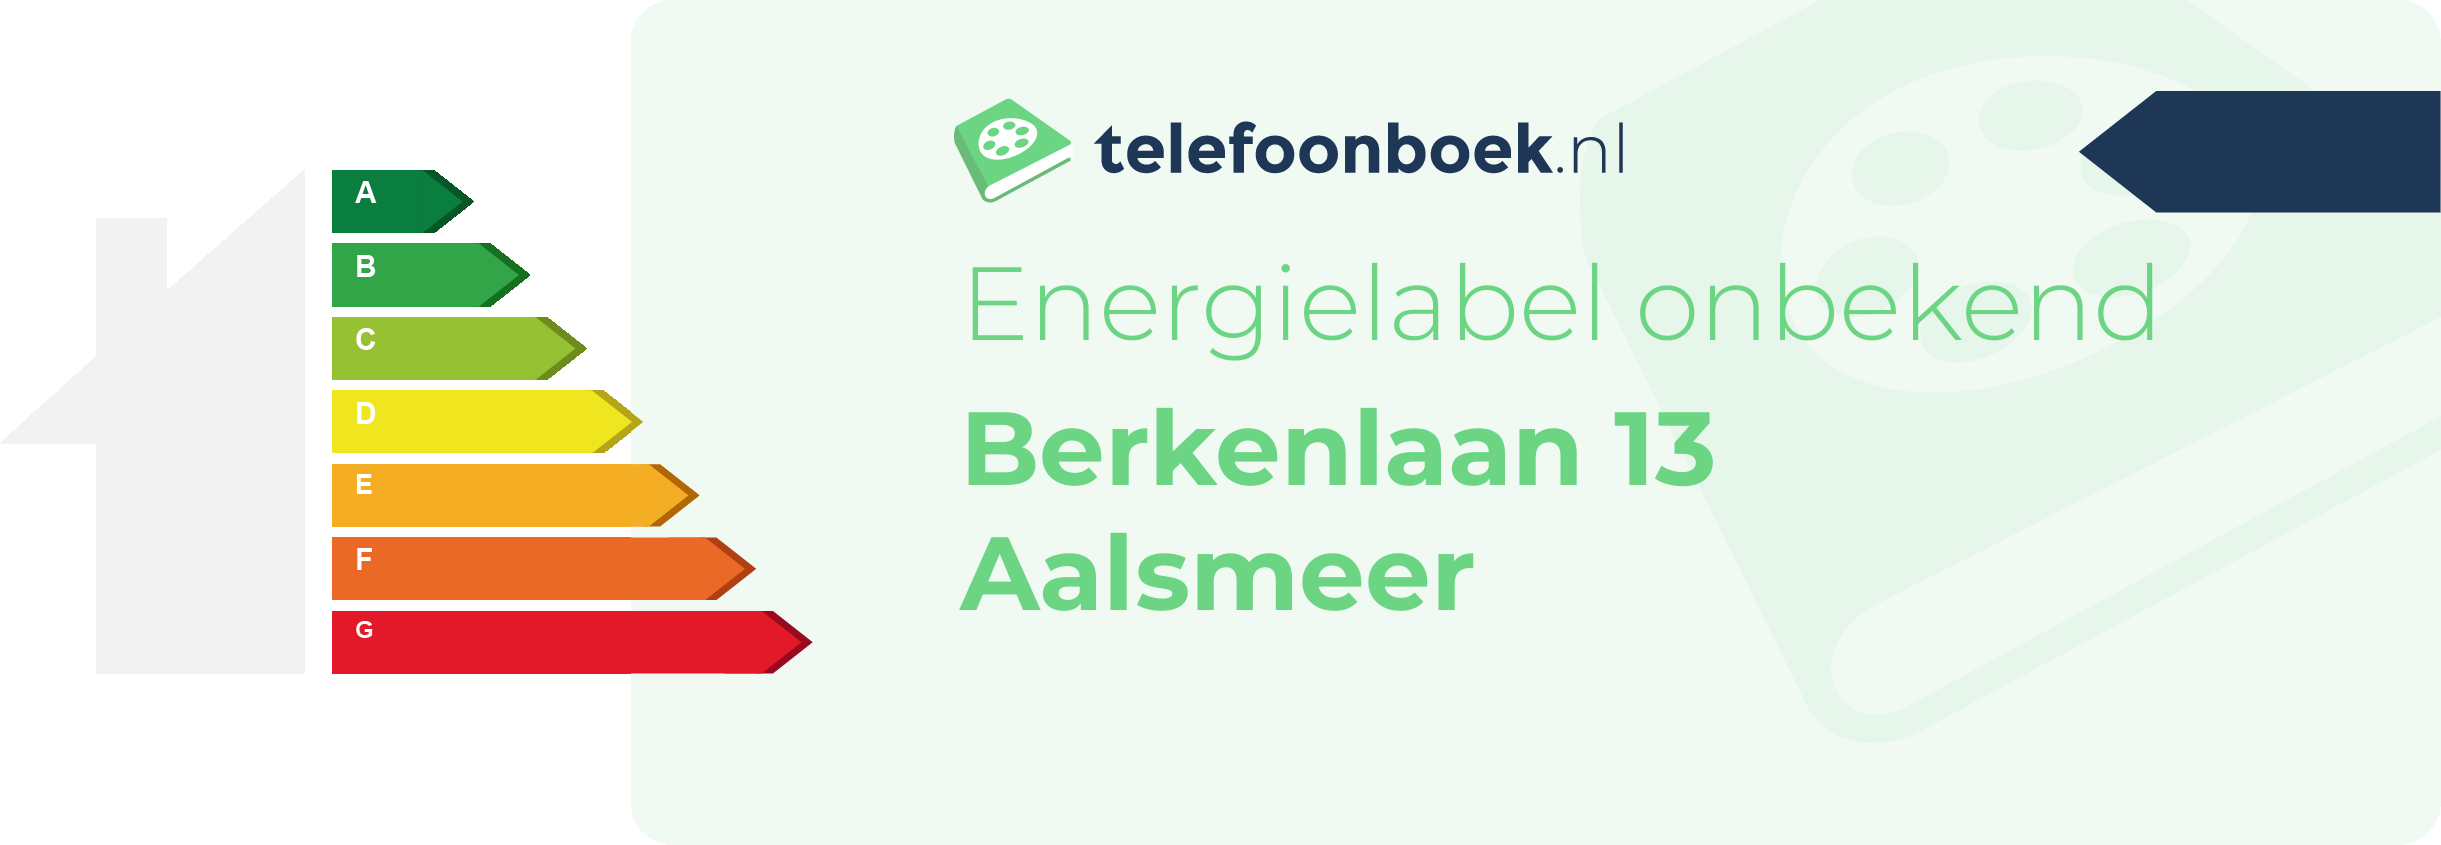 Energielabel Berkenlaan 13 Aalsmeer